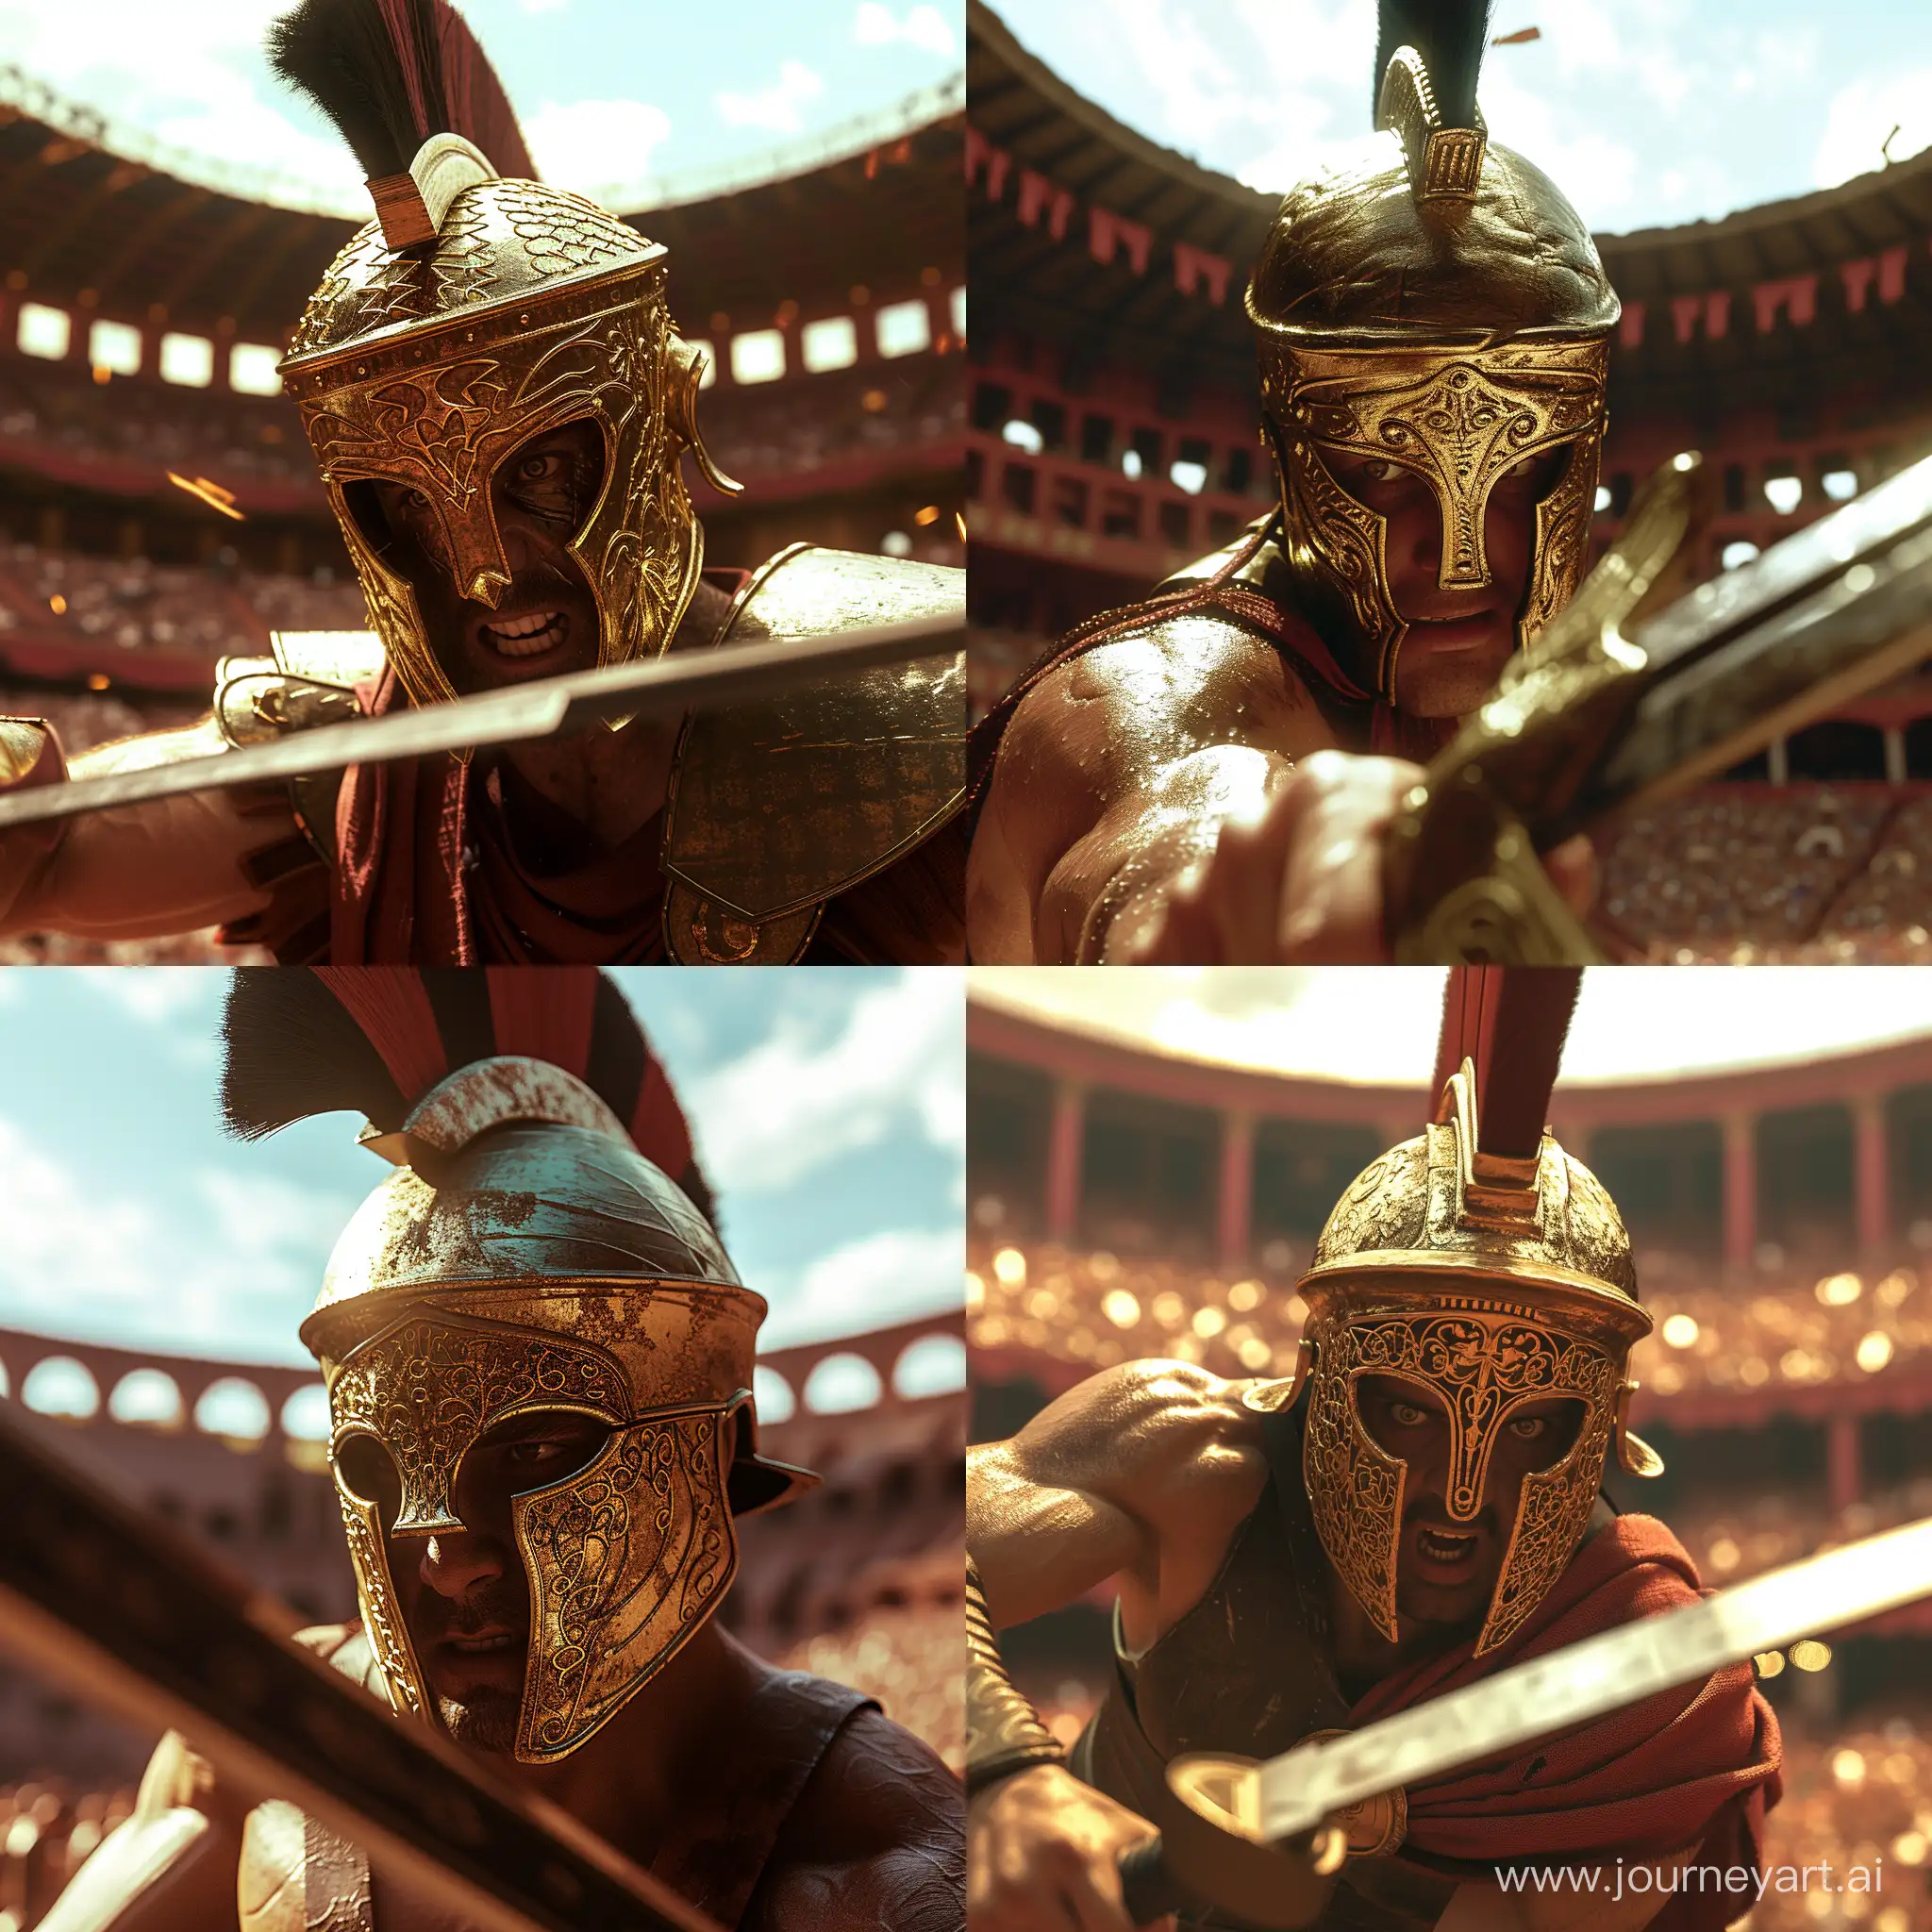 Golden-Filigree-Gladiator-in-Epic-Coliseum-Battle